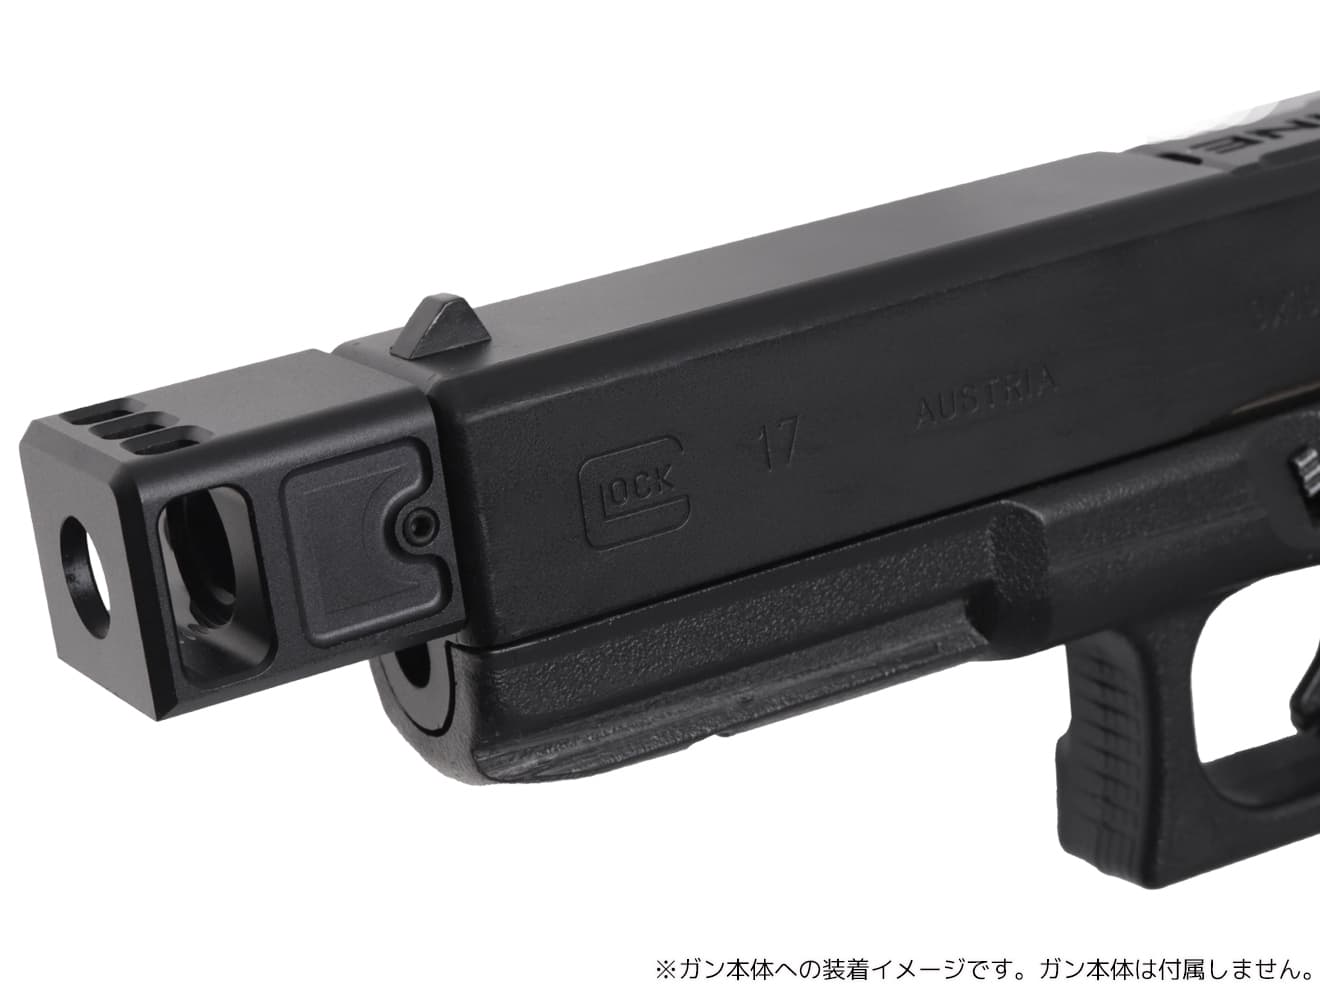 5KU アルミCNC TBRCiタイプ Micro Comp コンペンセイター for 14mm逆ネジ(GLOCK)